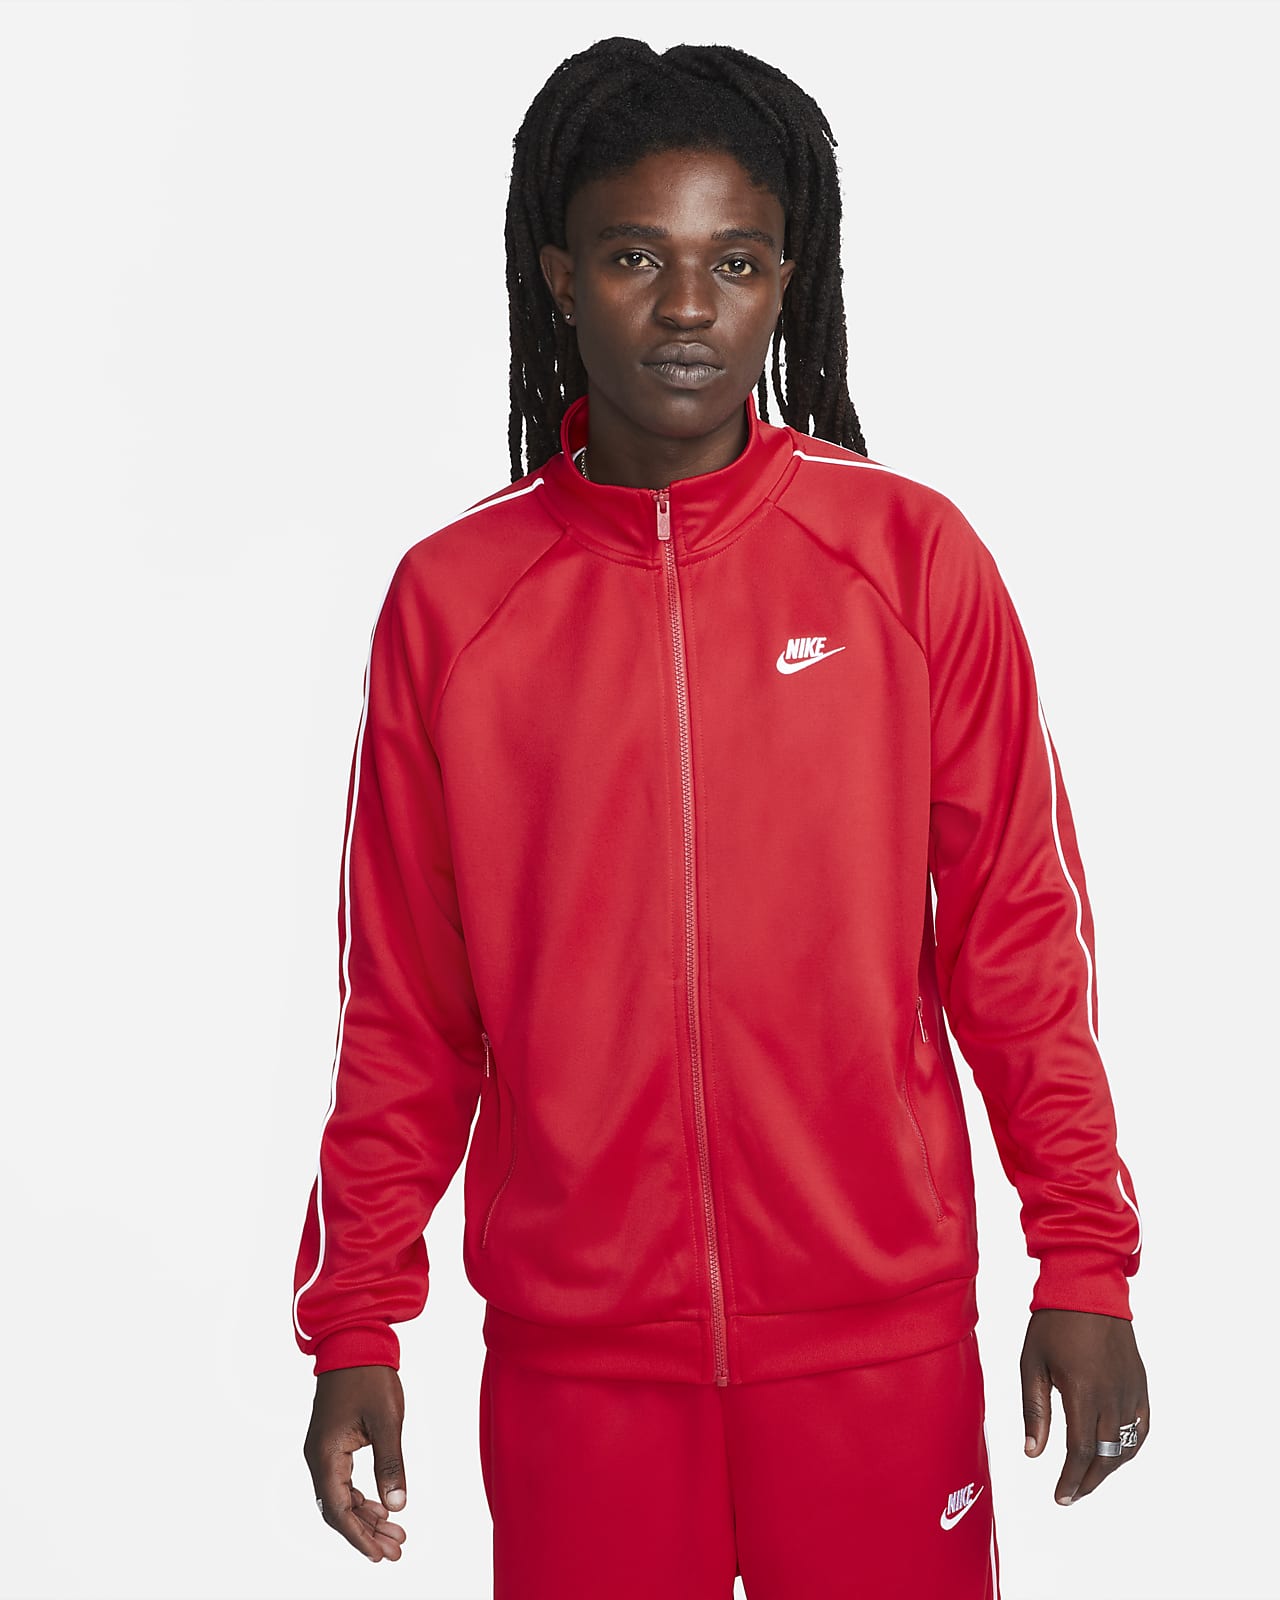 Nike Hooded & Fleece jackets sale - discounted price | FASHIOLA.in